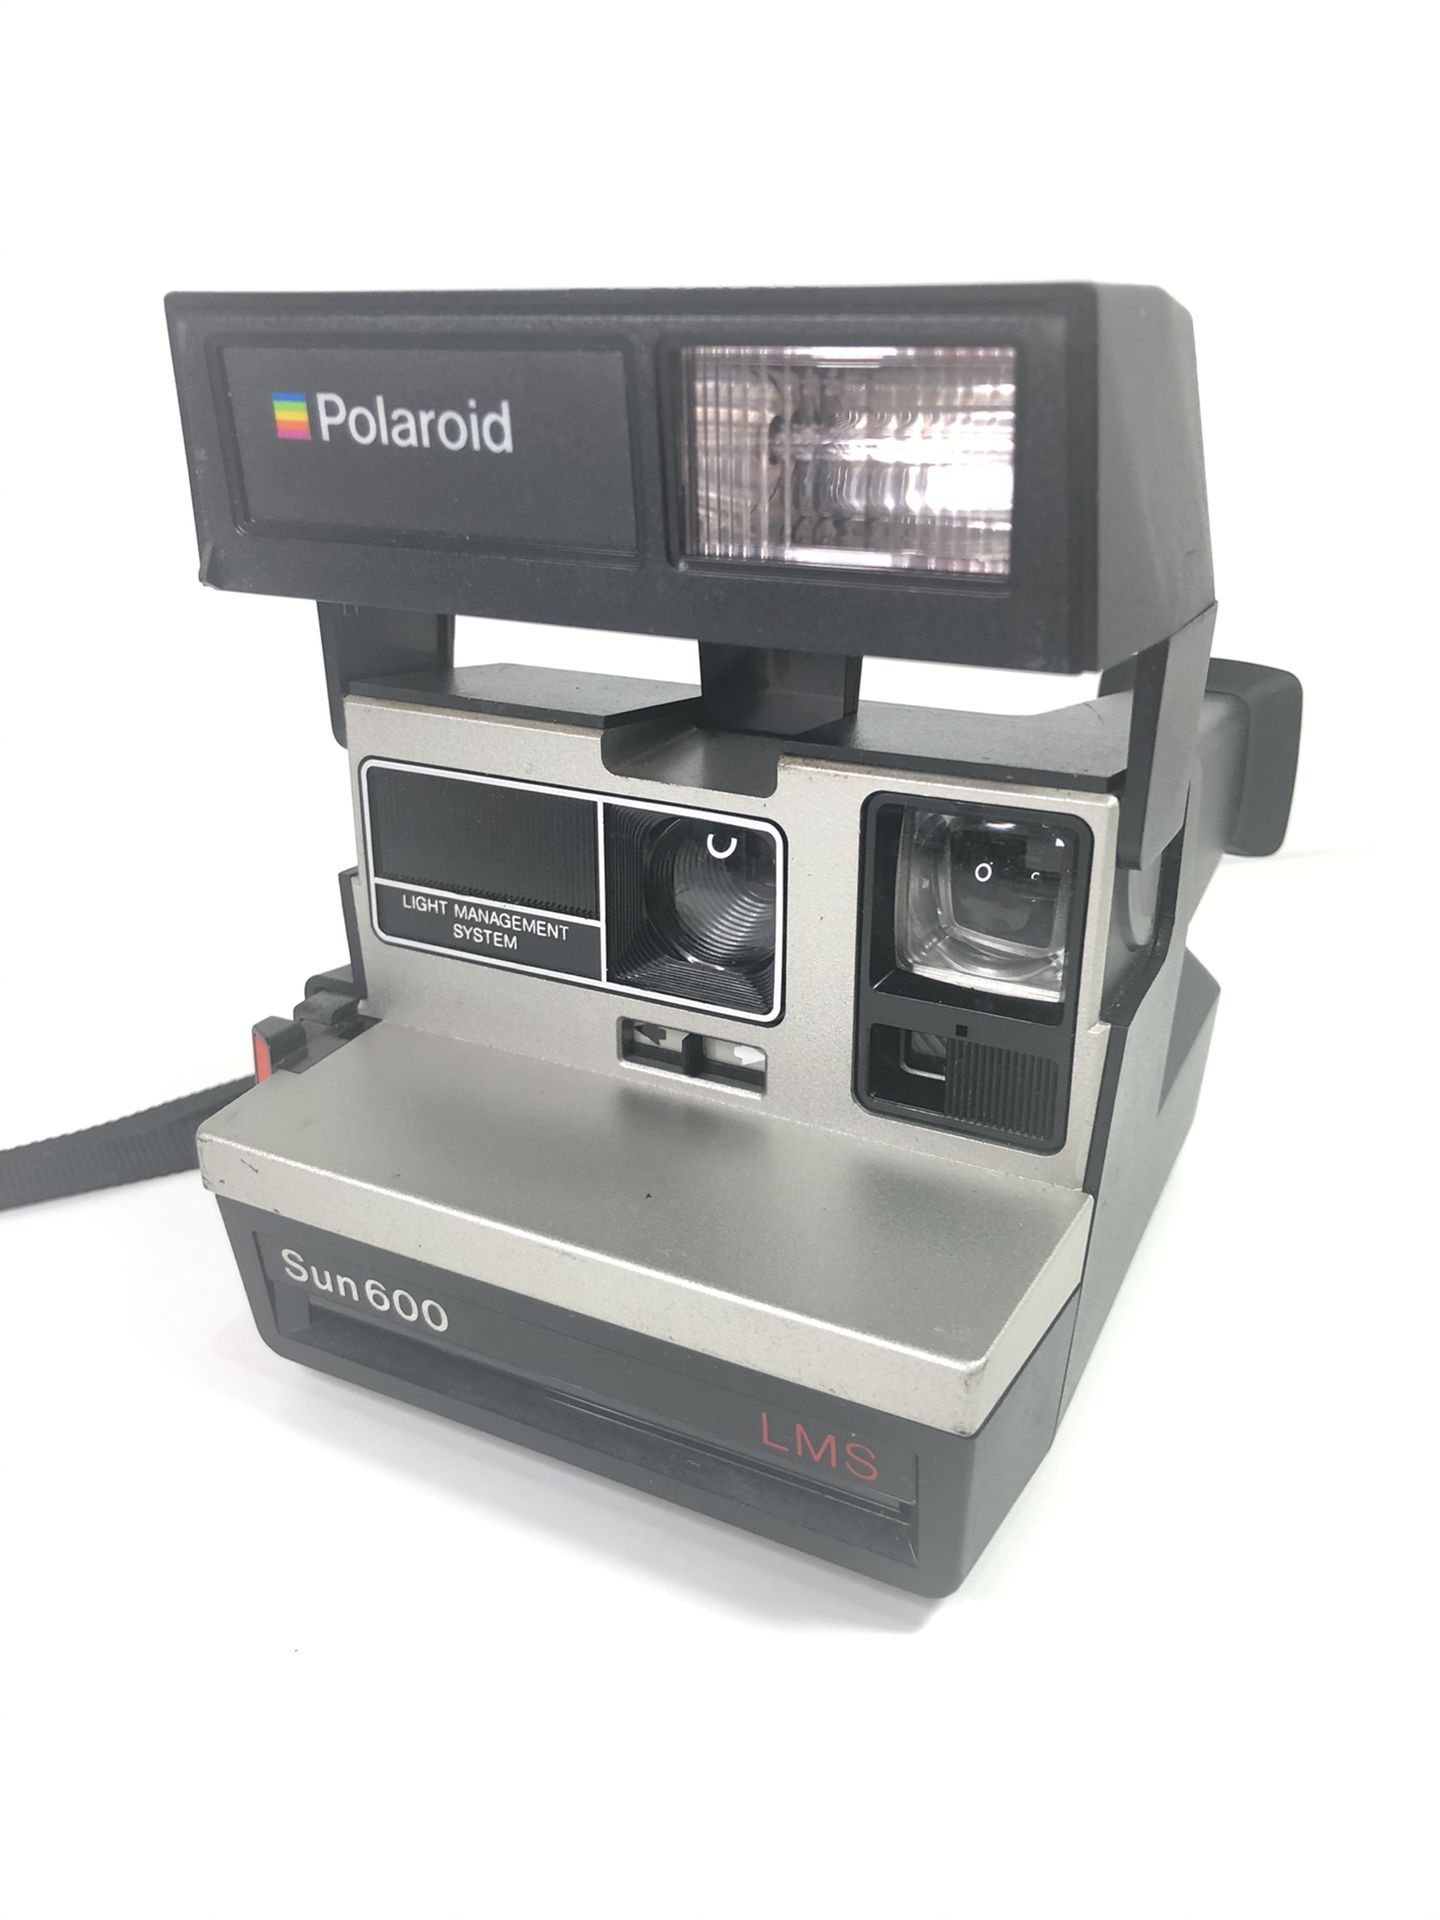 Vintage Polaroid Sun 600 LMS Instant Film Flash Camera Untested